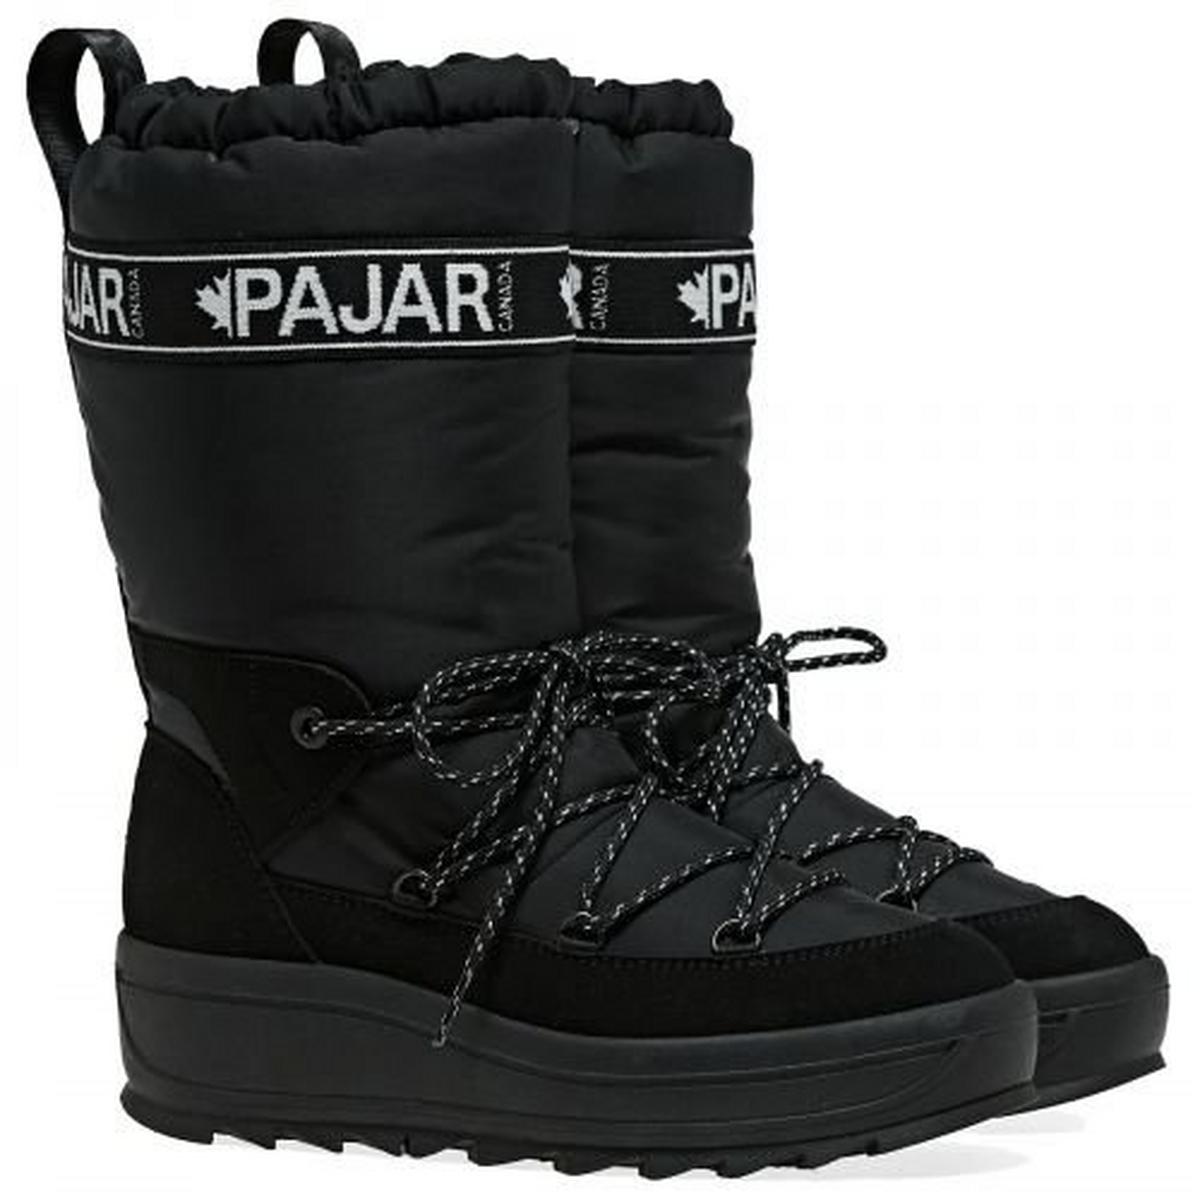 Pajar Women's Galaxy High Boot - Black